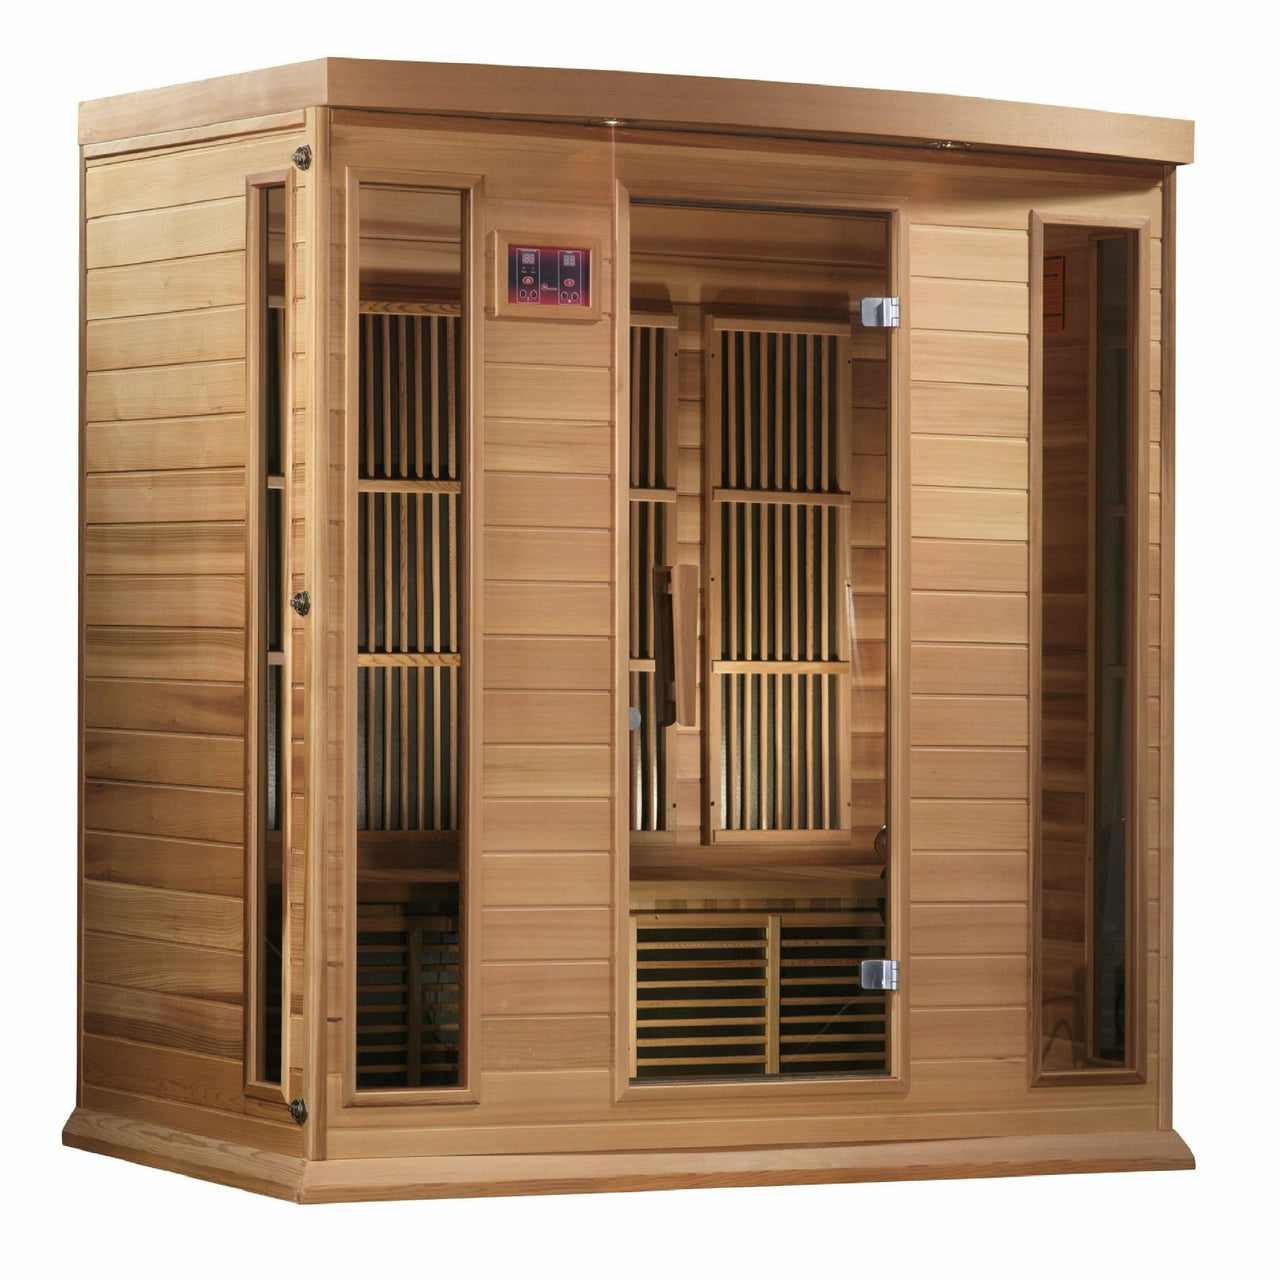 Golden Designs Sauna: Maxxus "Montilemar Edition" 4 Person Near Zero EMF FAR Infrared Carbon - Canadian Red Cedar - MX-K406-01-ZF CED - Fire Pit Stock